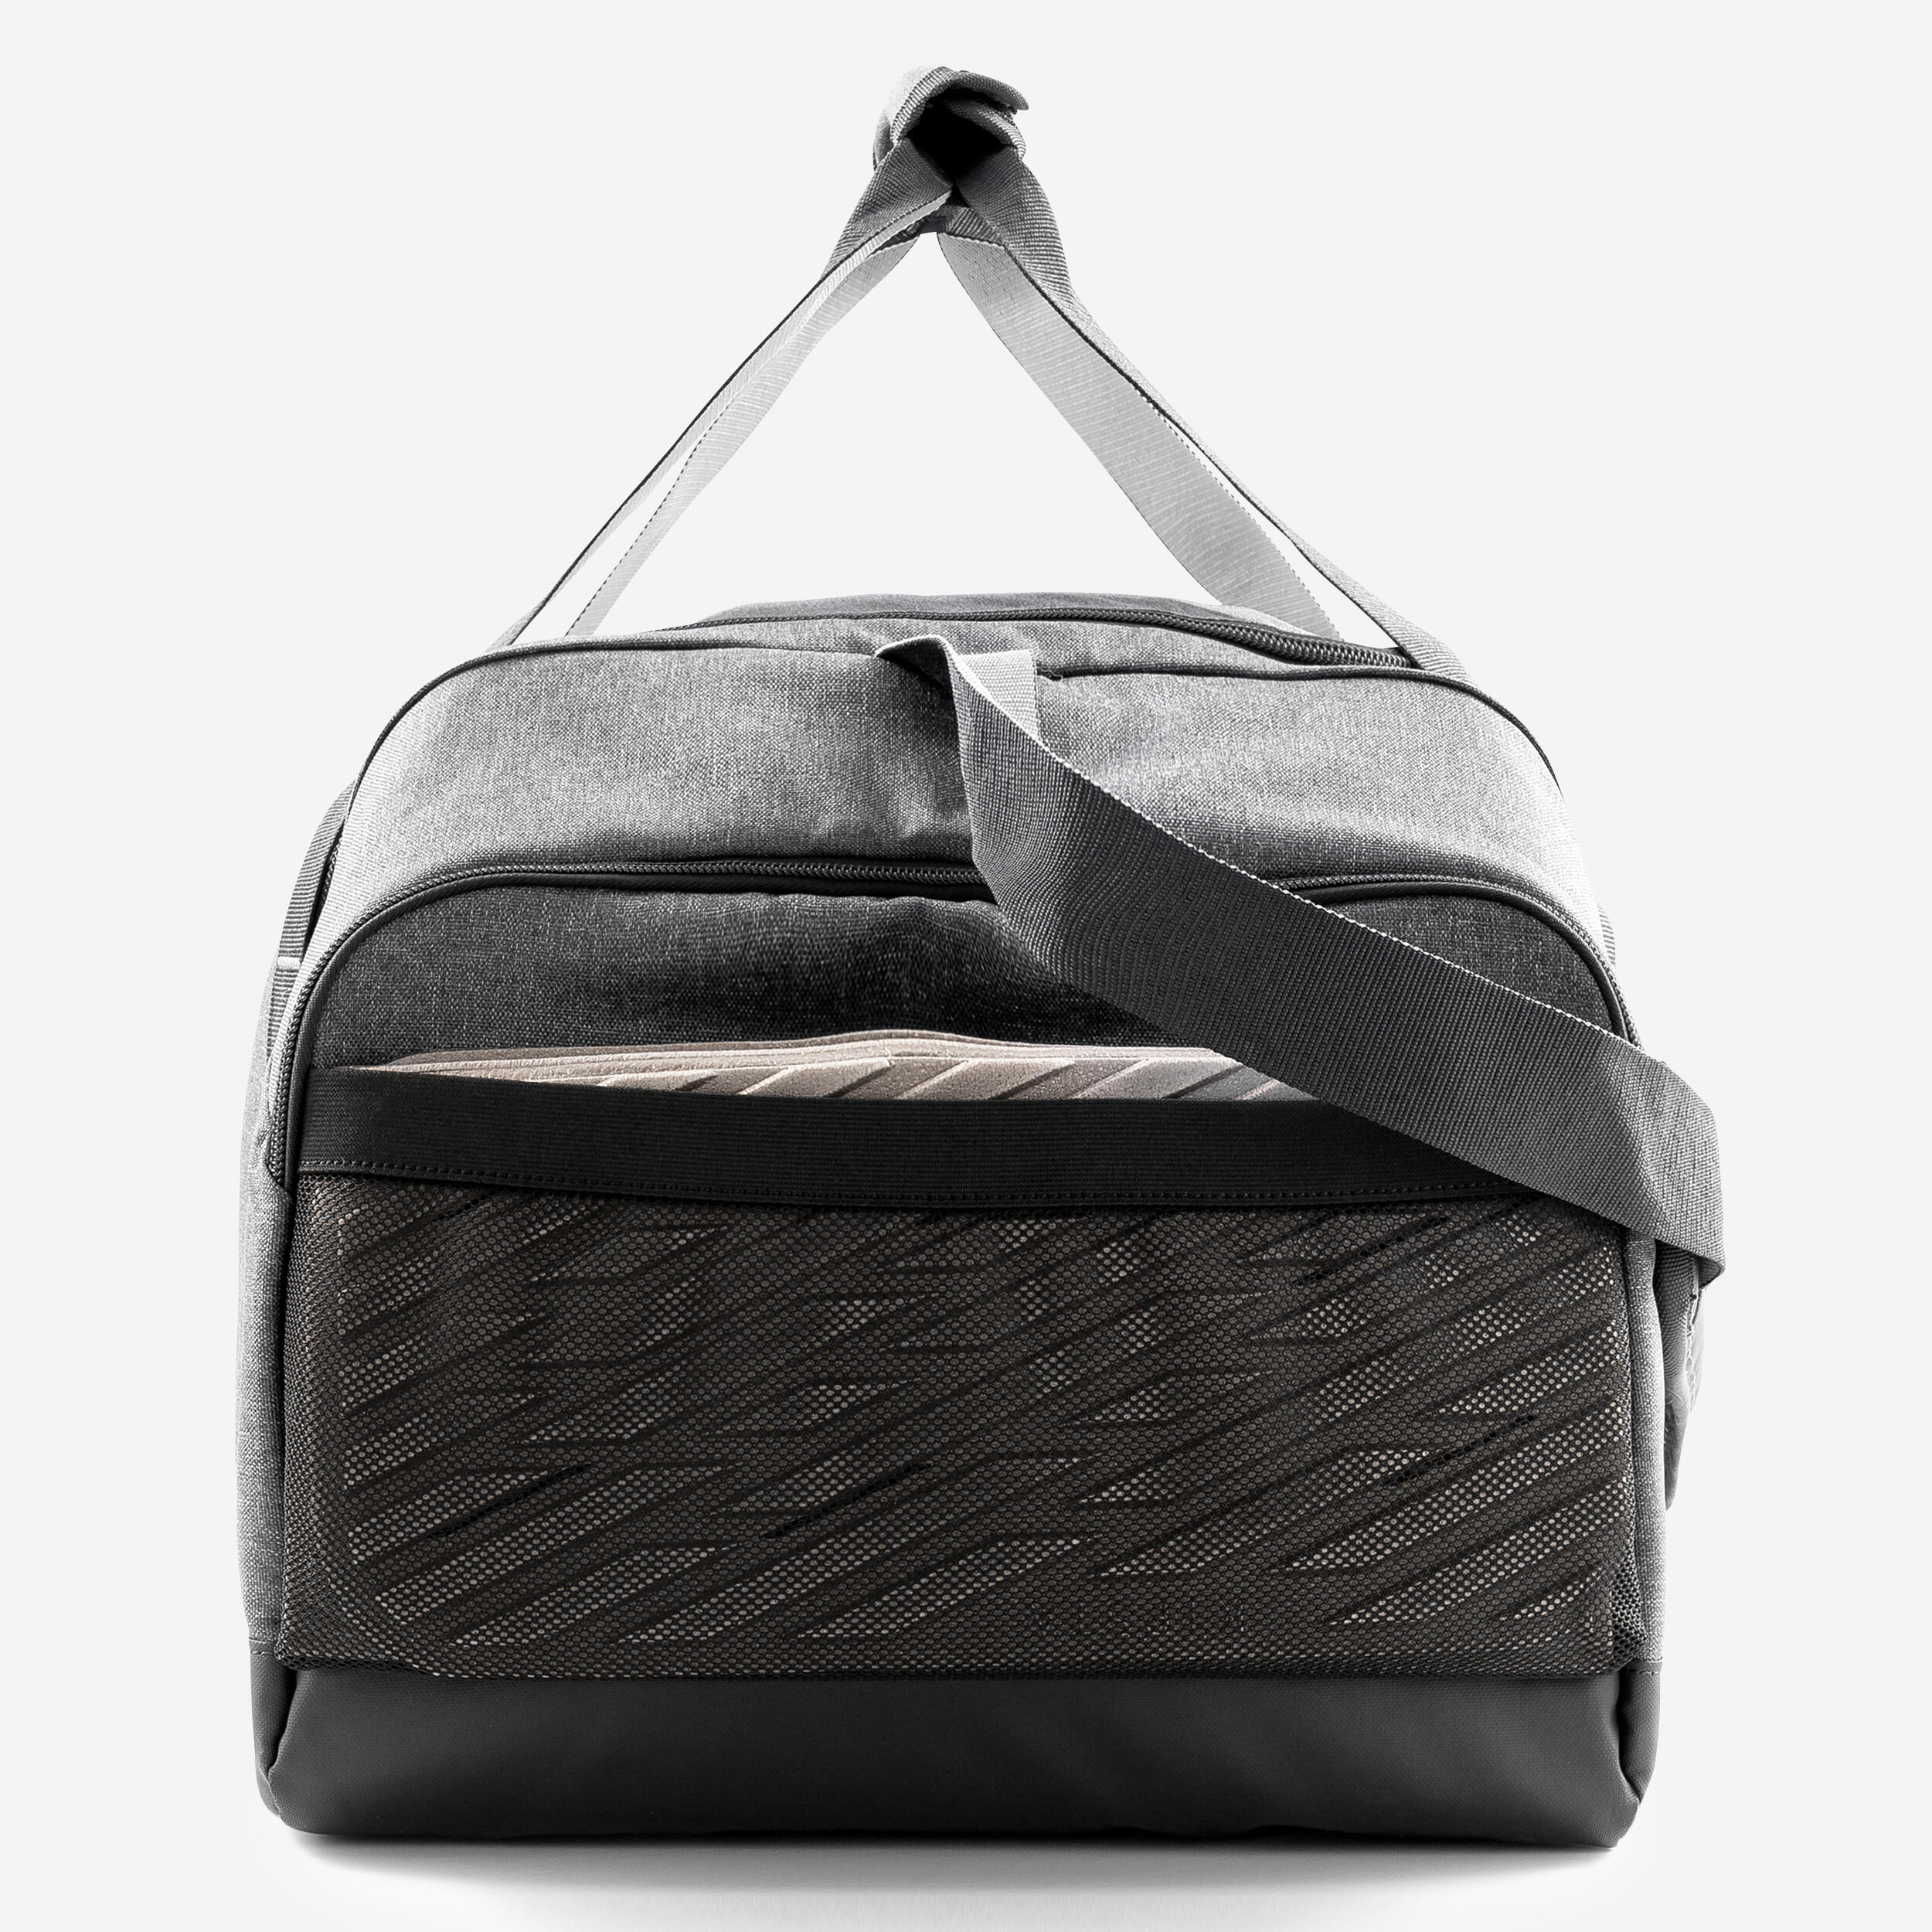 55L Sports Bag Academic - Black/Grey 4/9